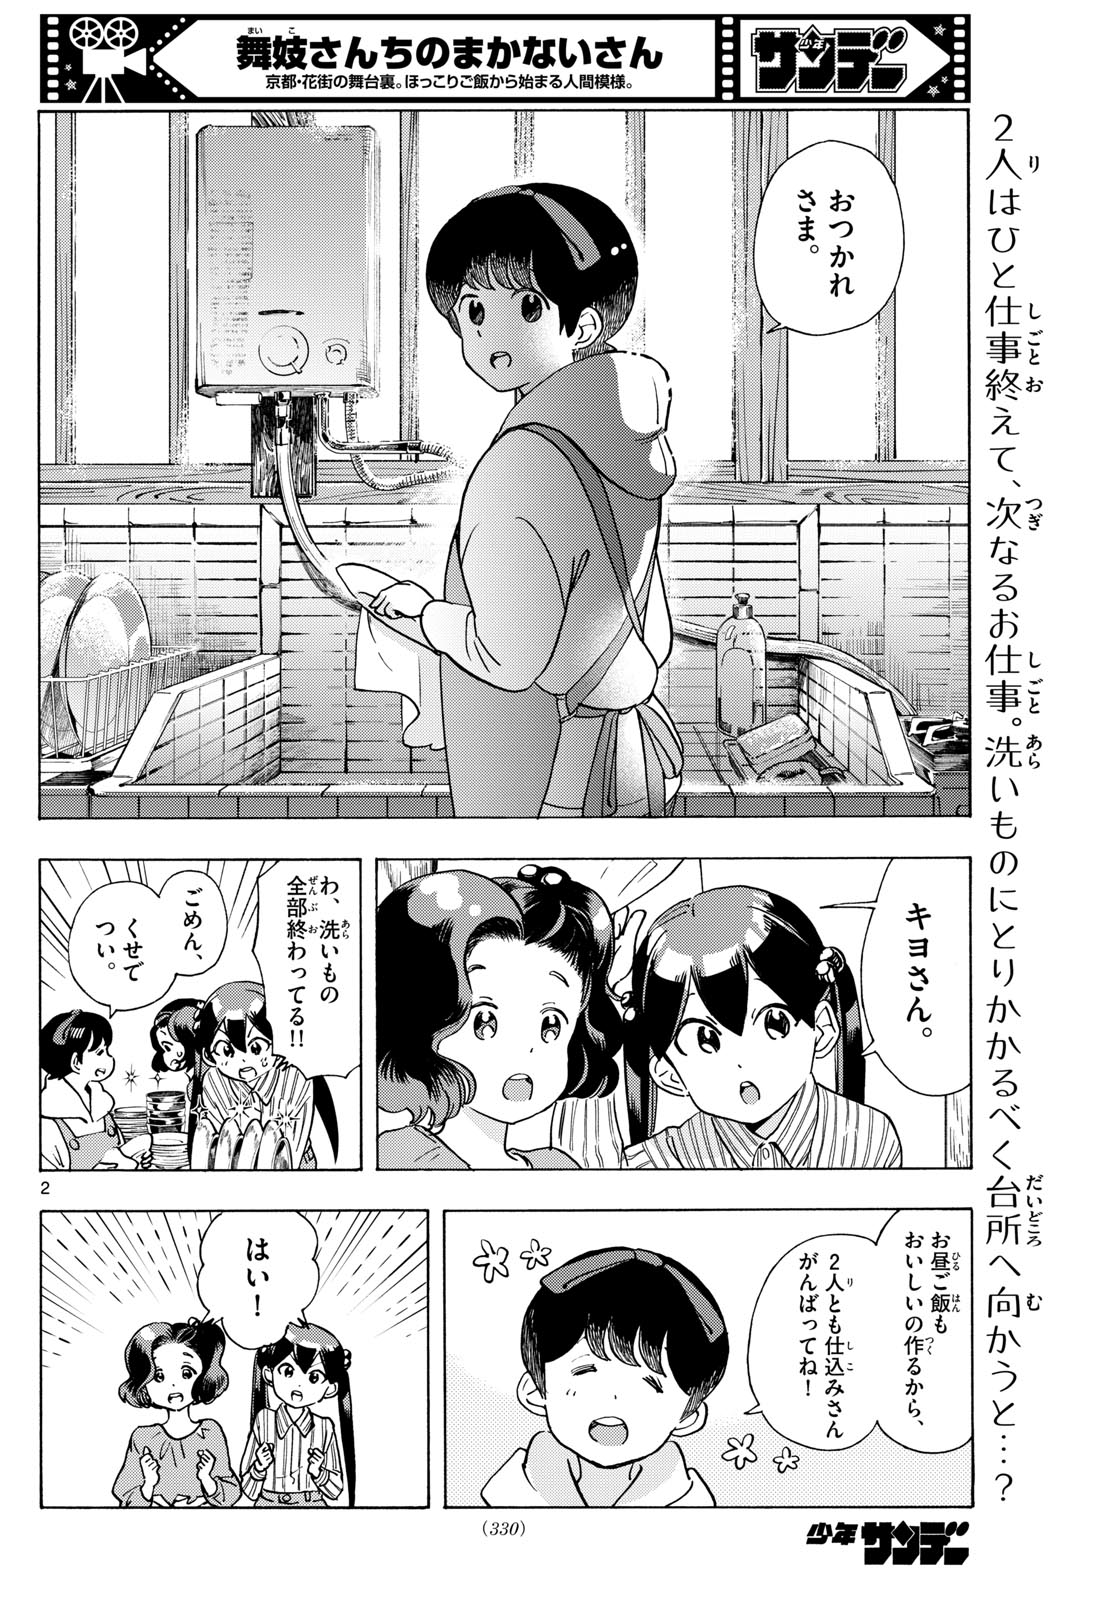 Maiko-san Chi no Makanai-san - Chapter 289 - Page 2